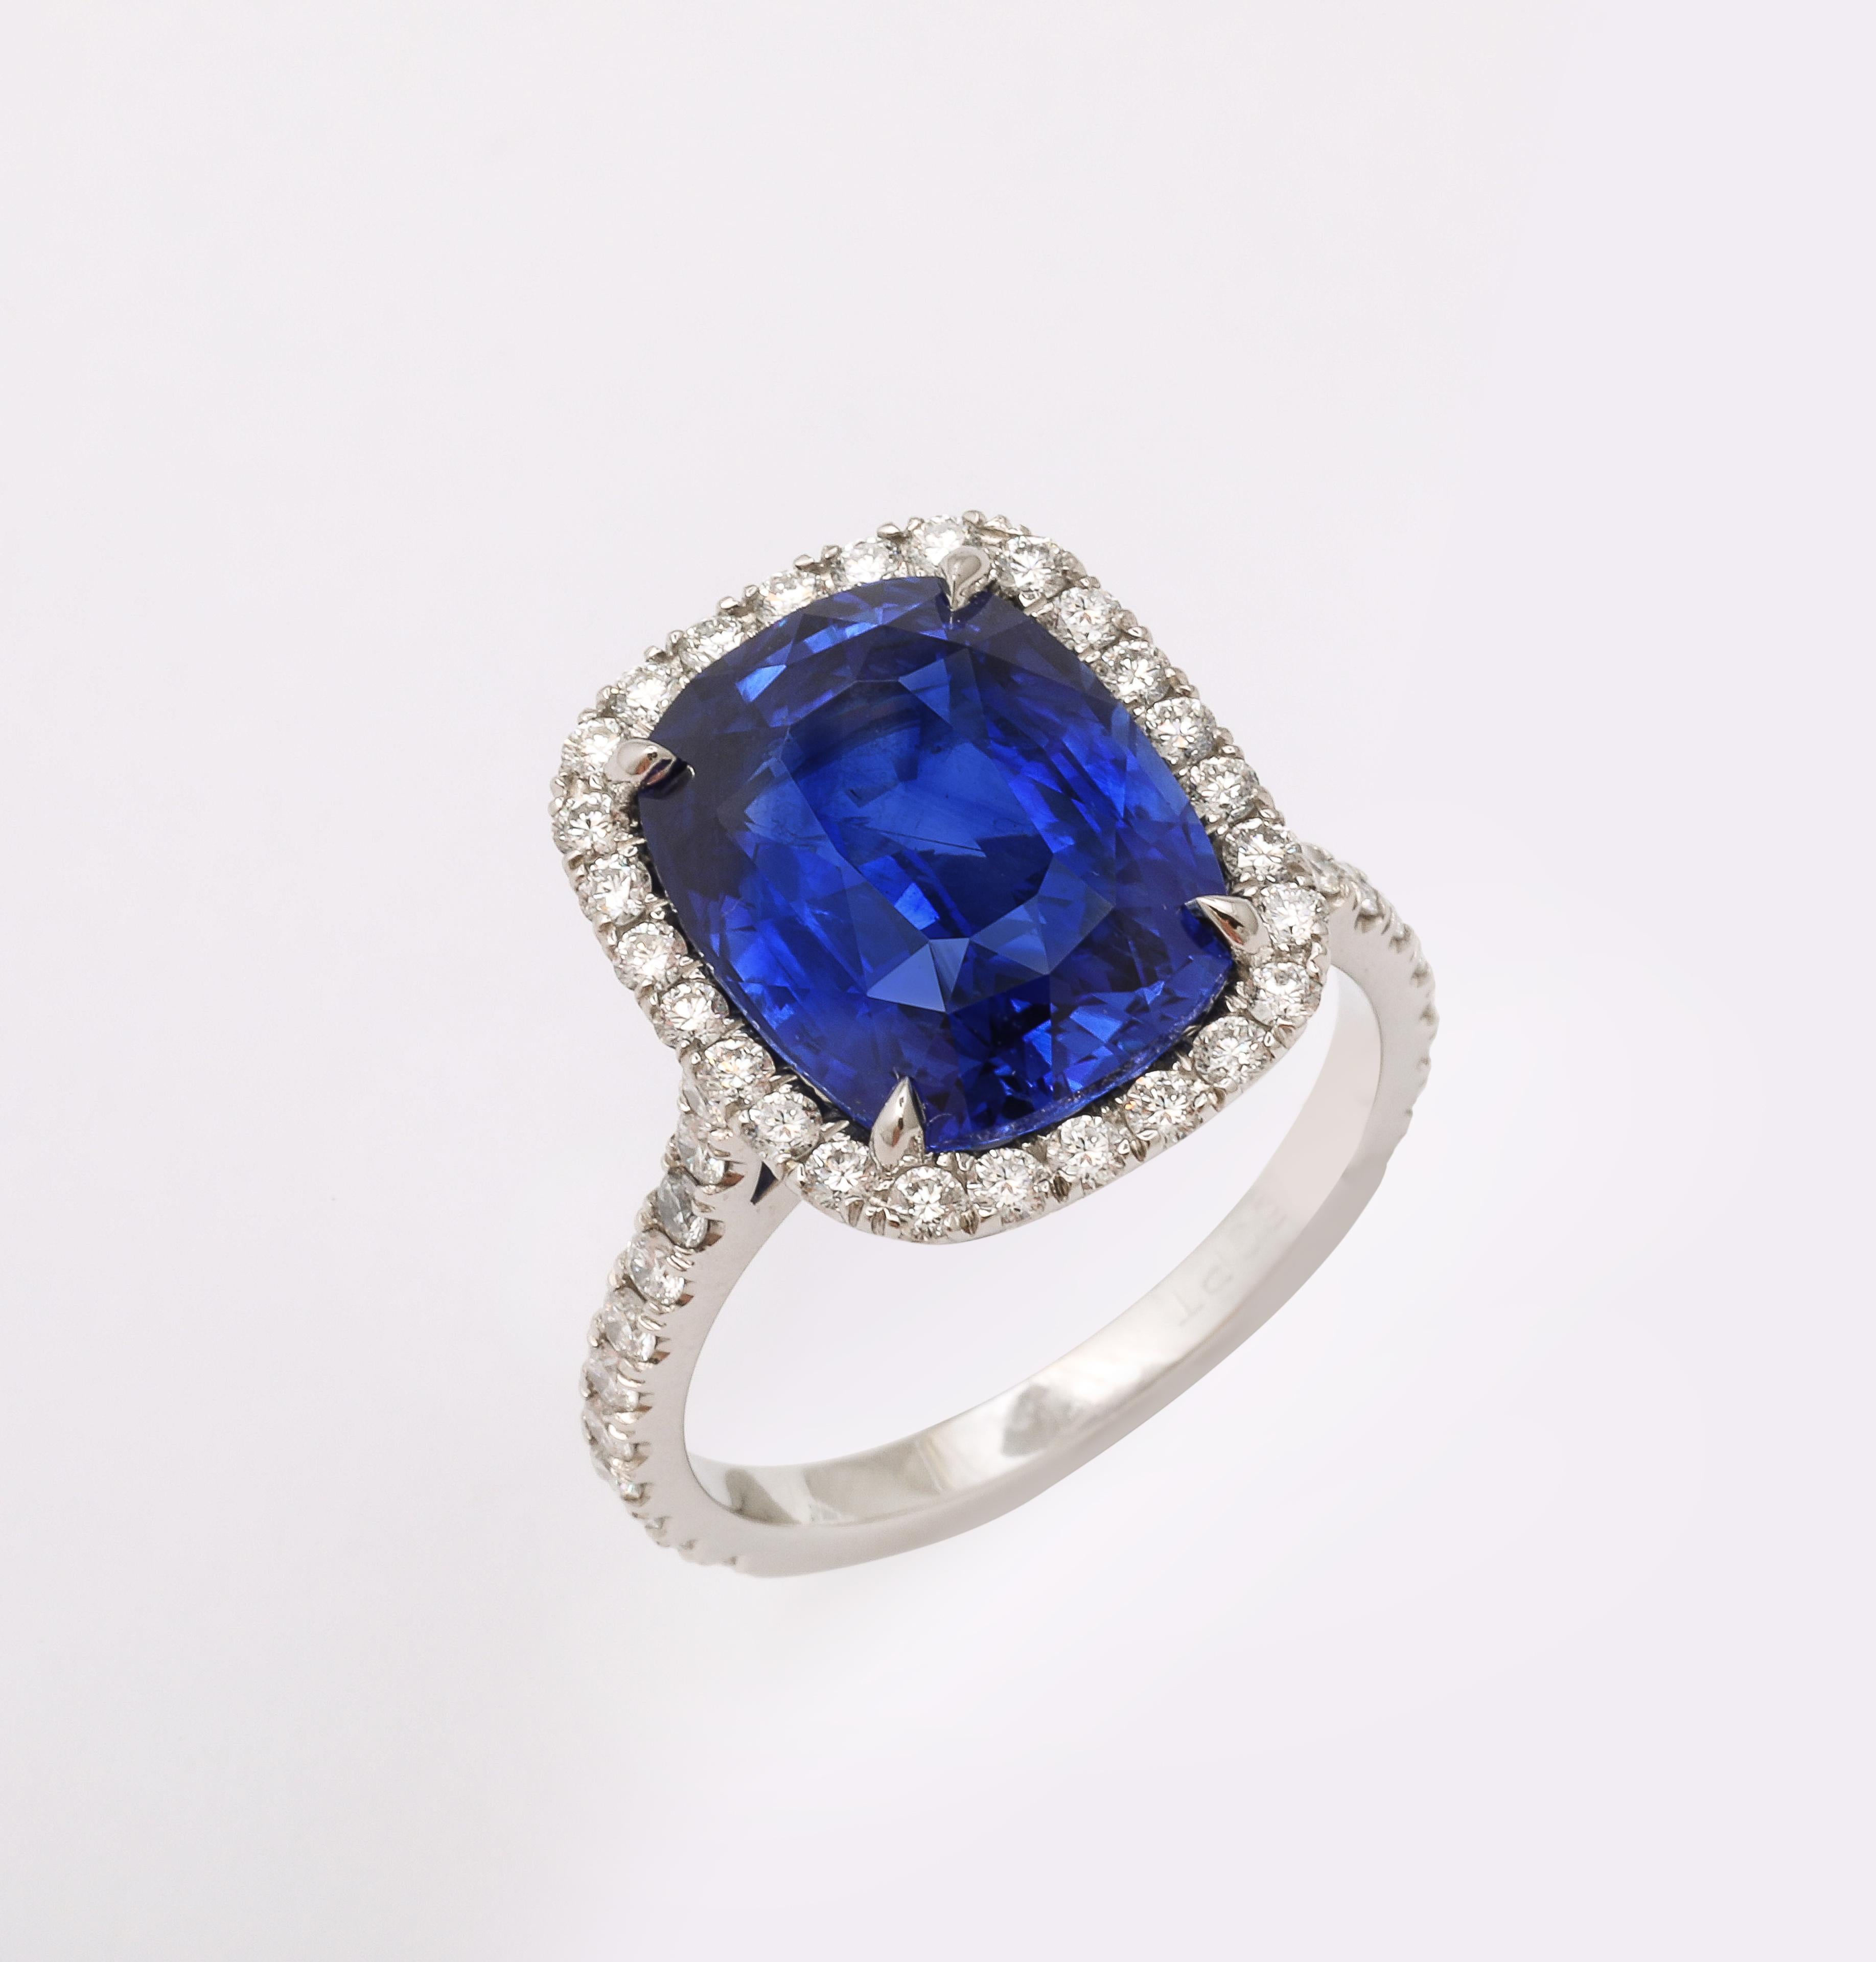 7 carat Vivid Blue Sapphire Ring For Sale 5